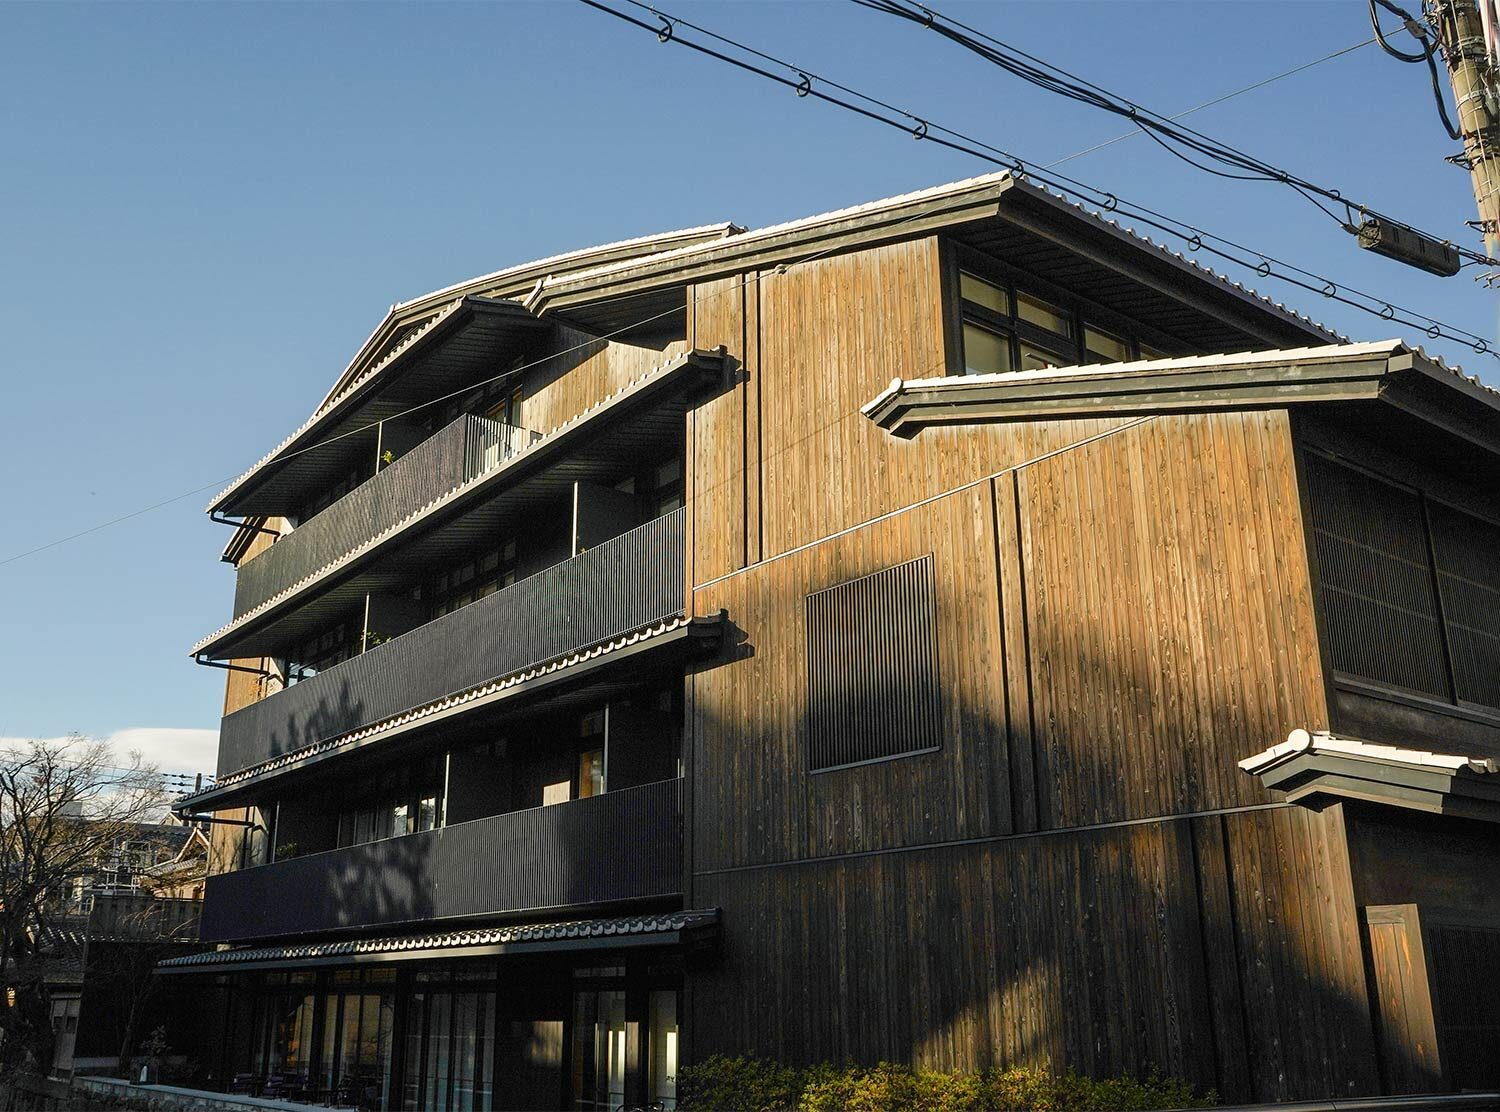 The Shinmonzen Nine elegant suites designed by Tadao Ando, all overlooking the Shirakawa River